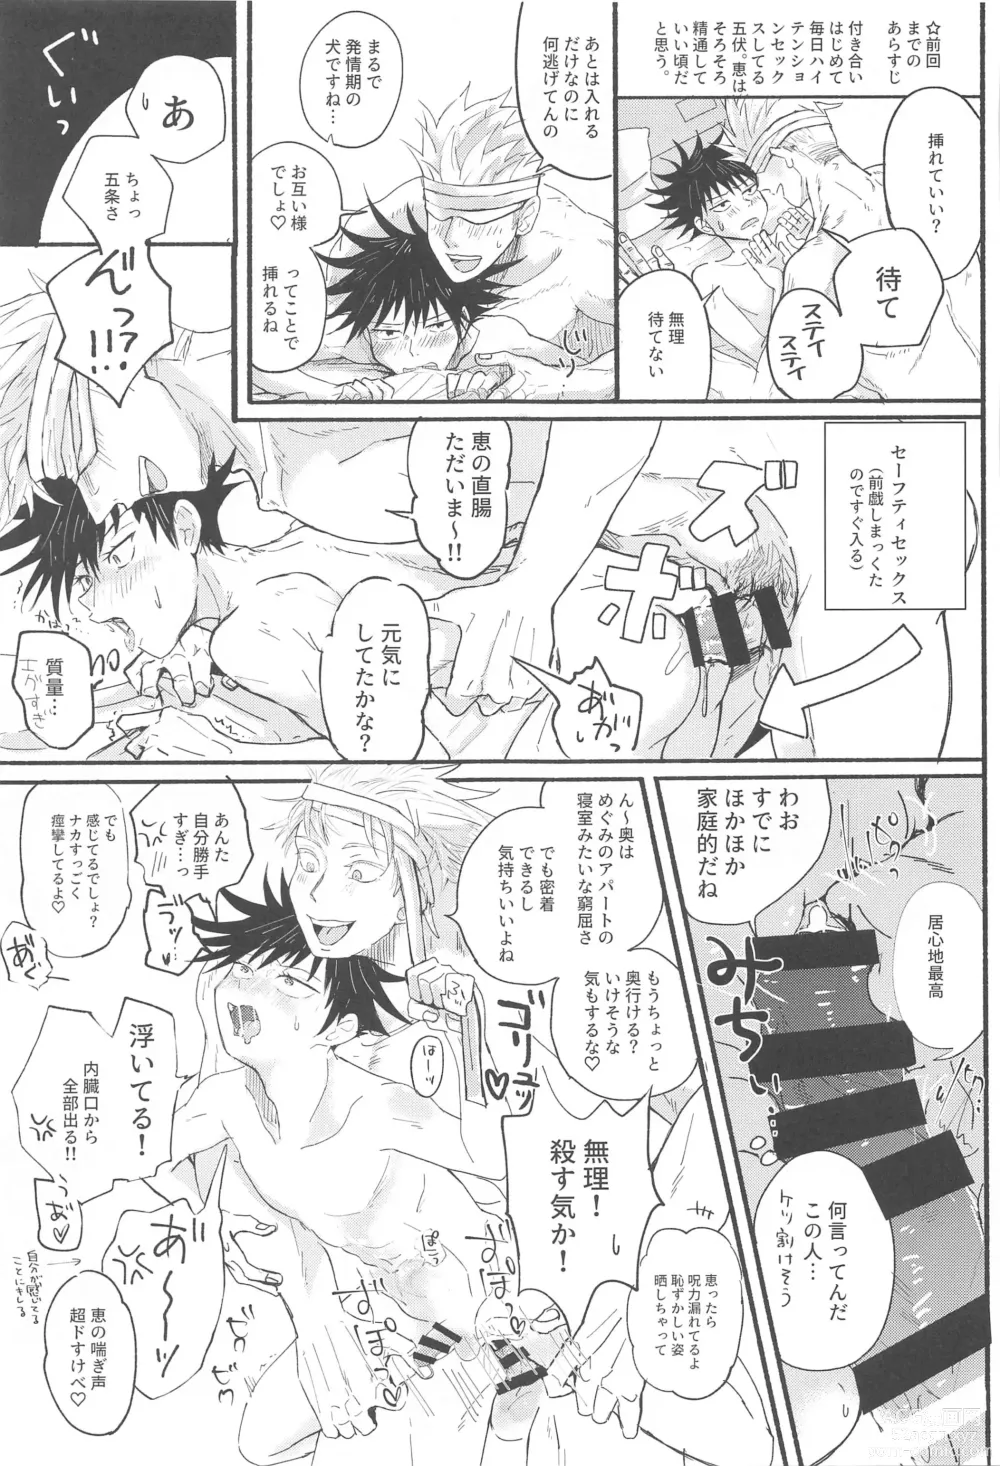 Page 22 of doujinshi Fusenai Inu